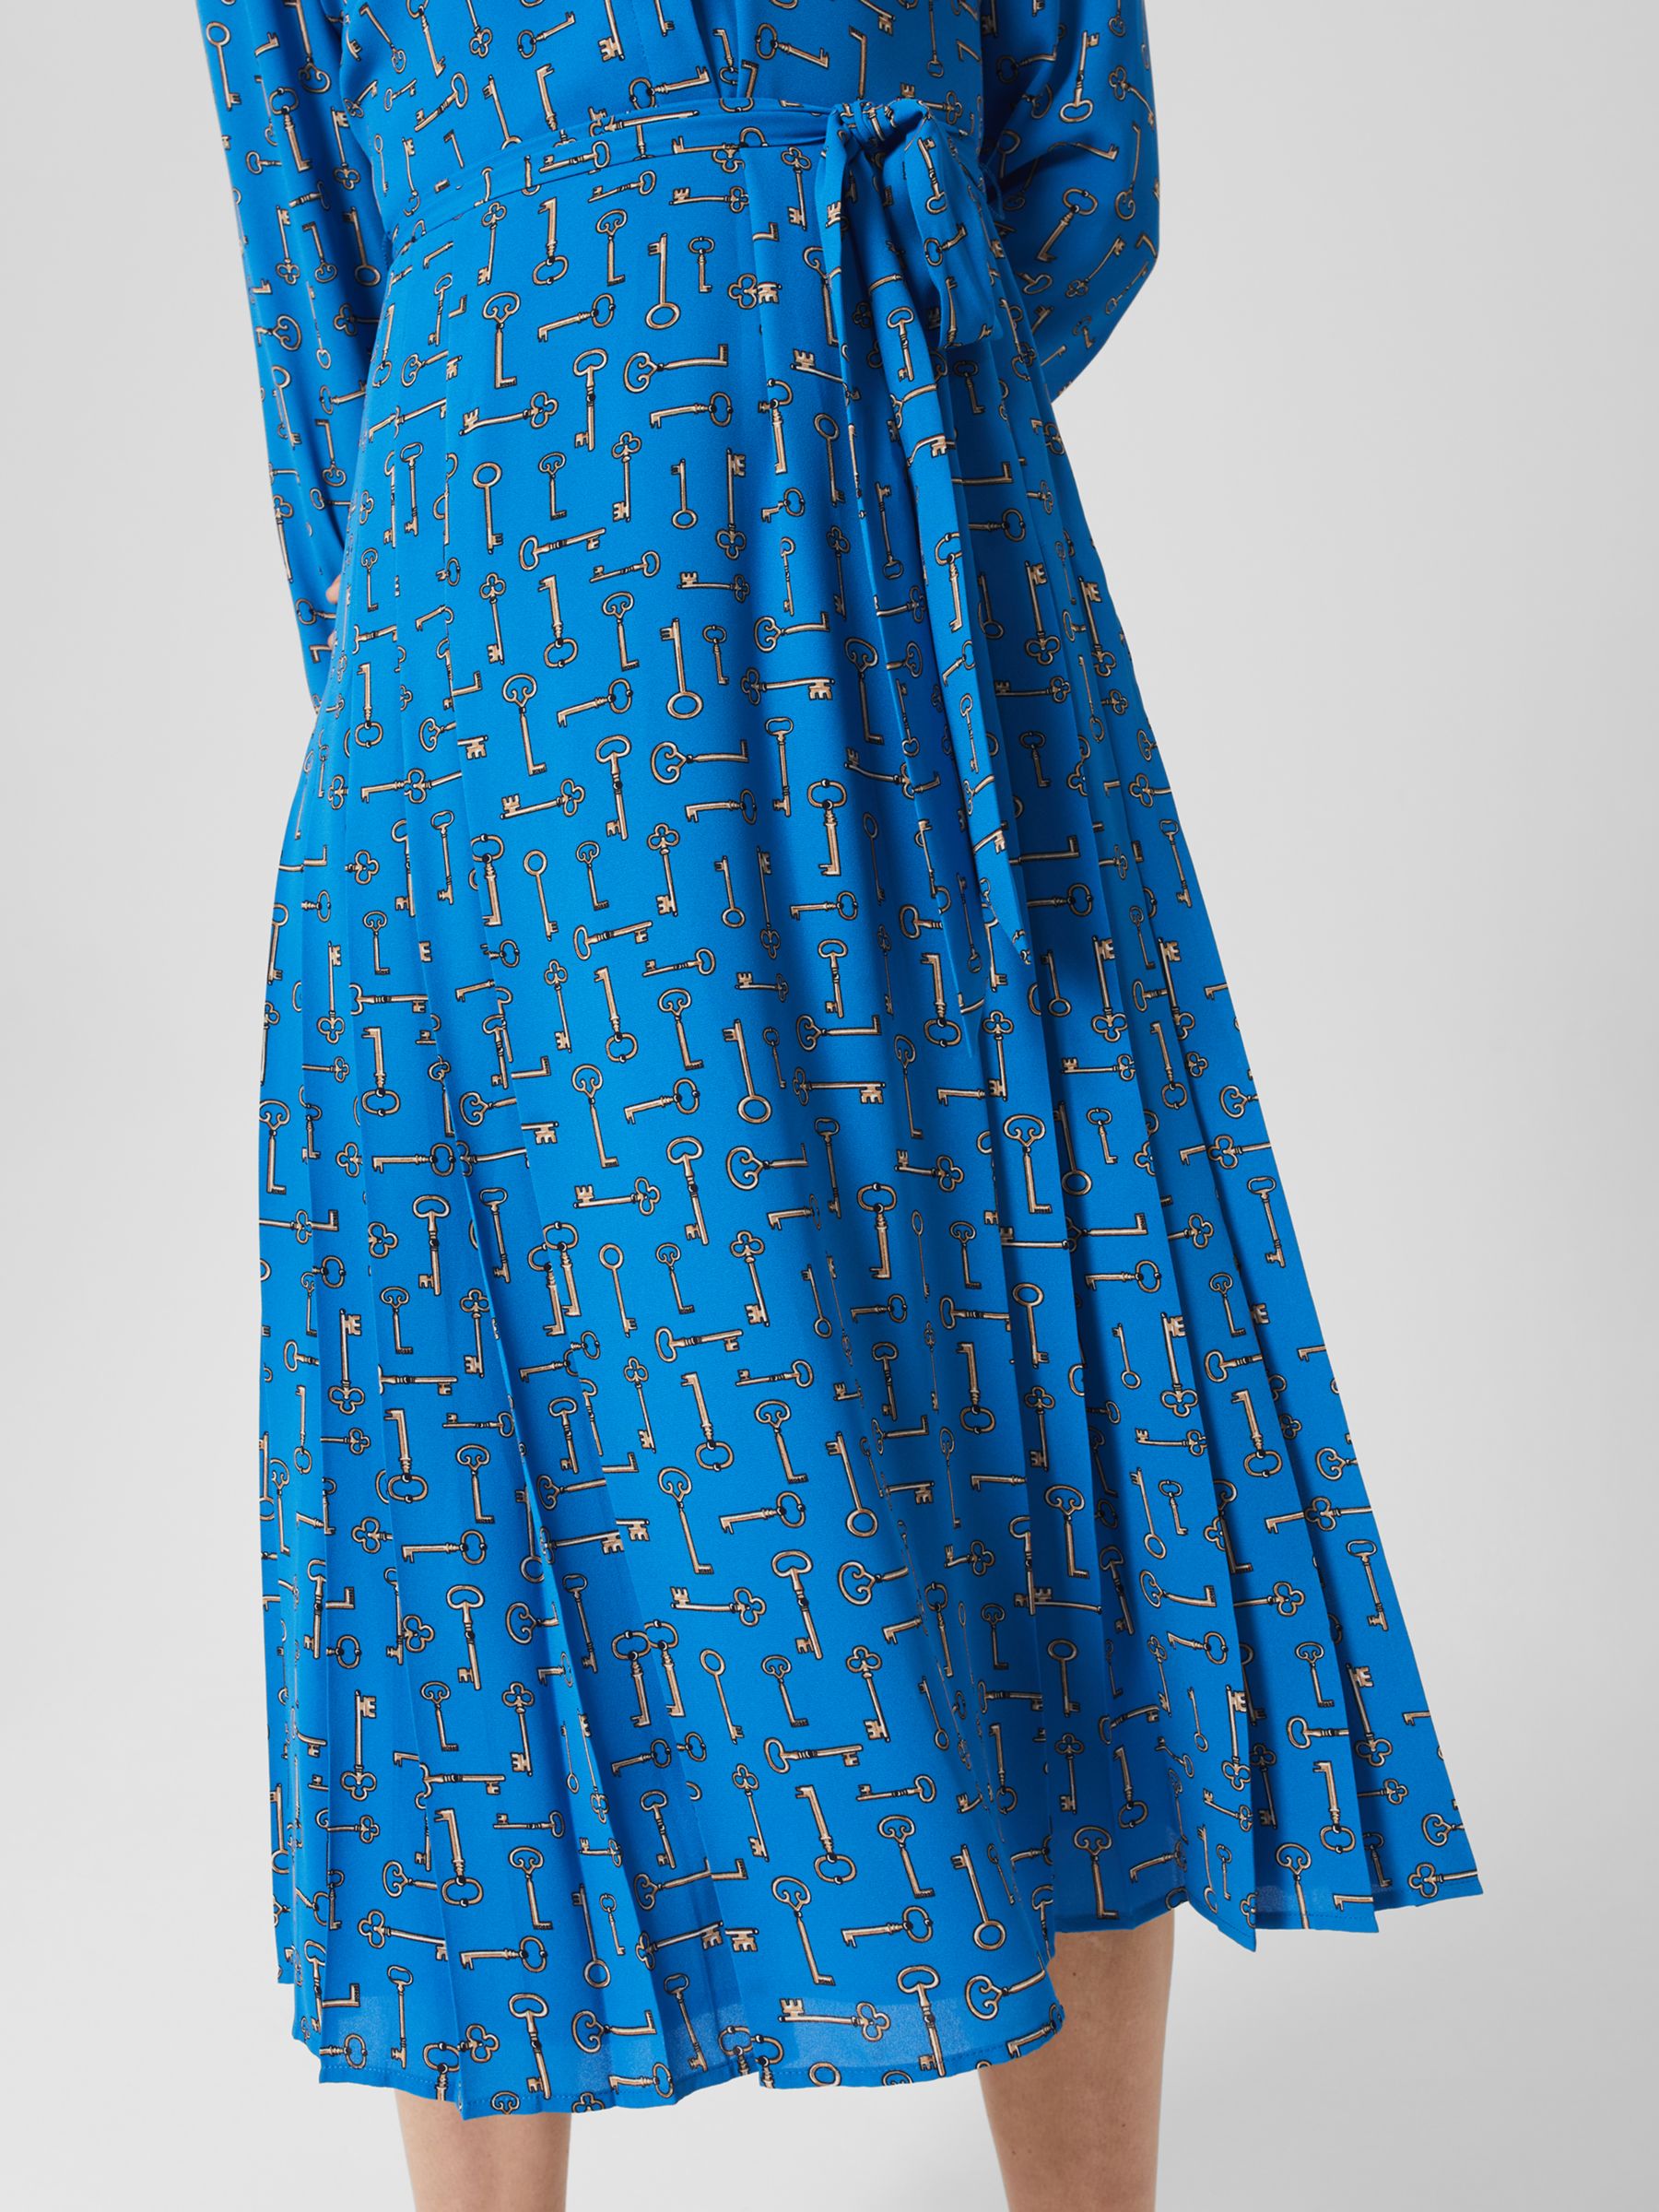 Hobbs Alberta Key Print Shirt Dress, Imperial Blue, 8